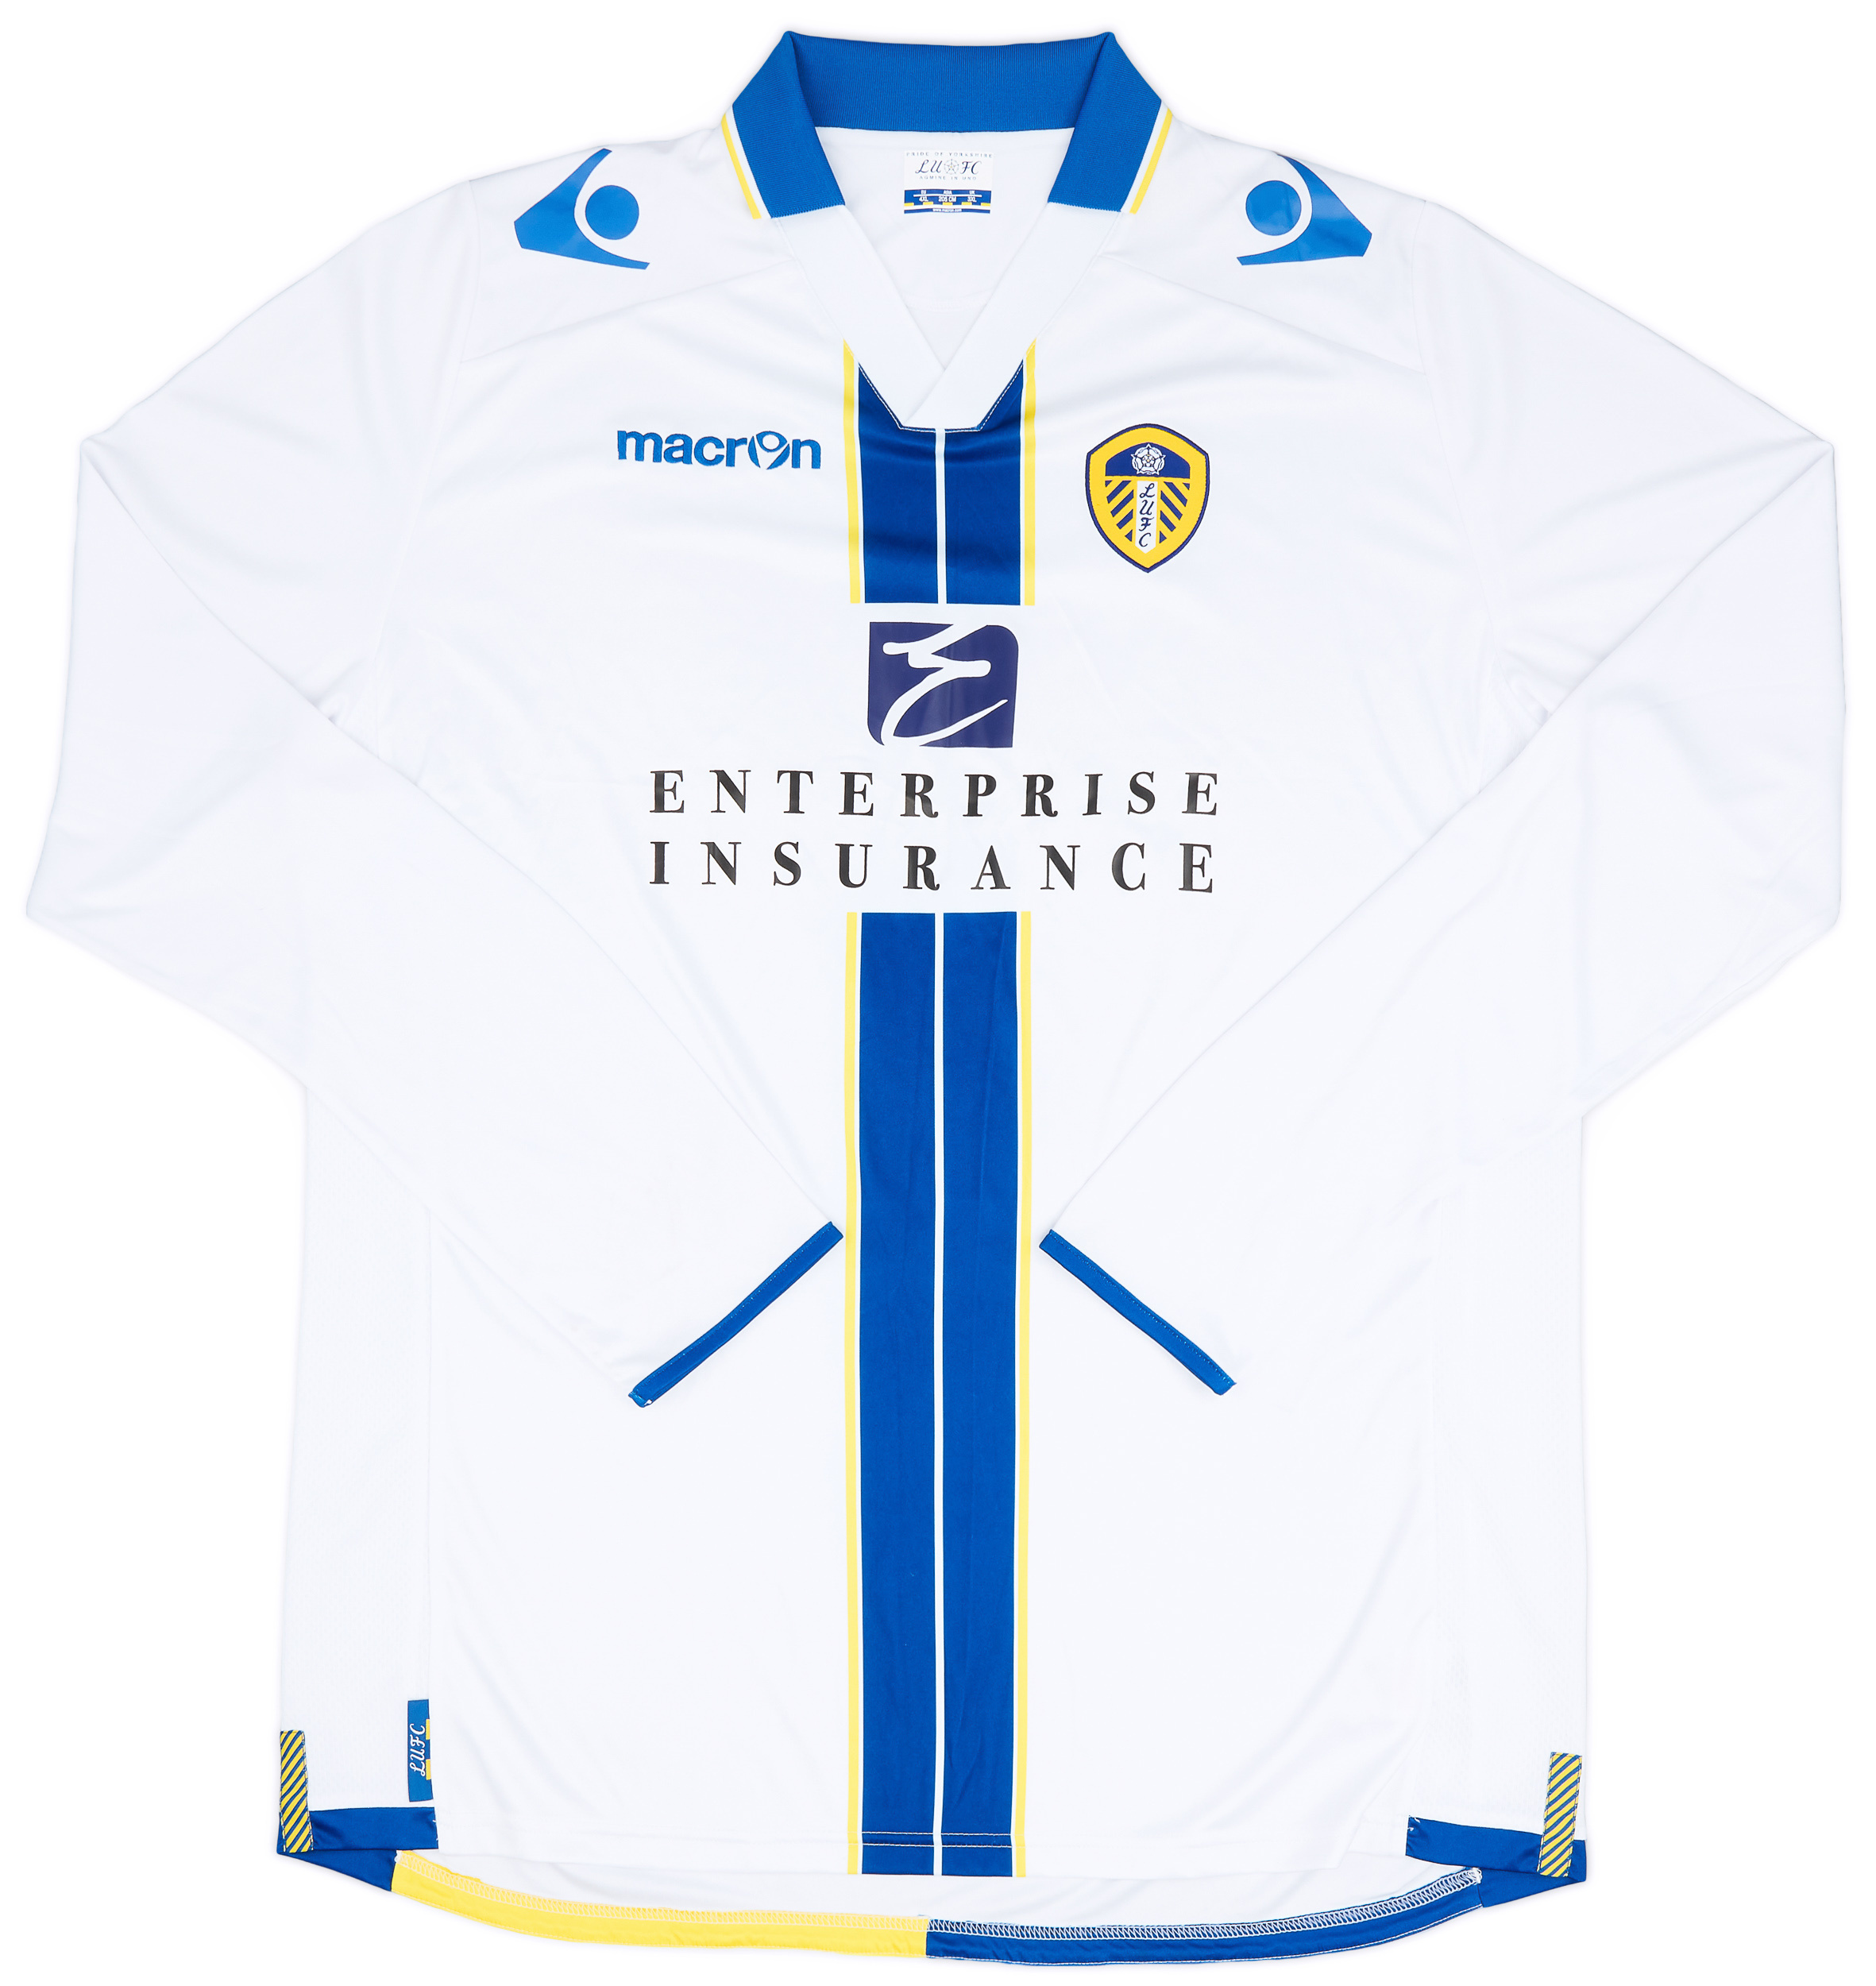 2013-14 Leeds United Home Shirt - 9/10 - ()